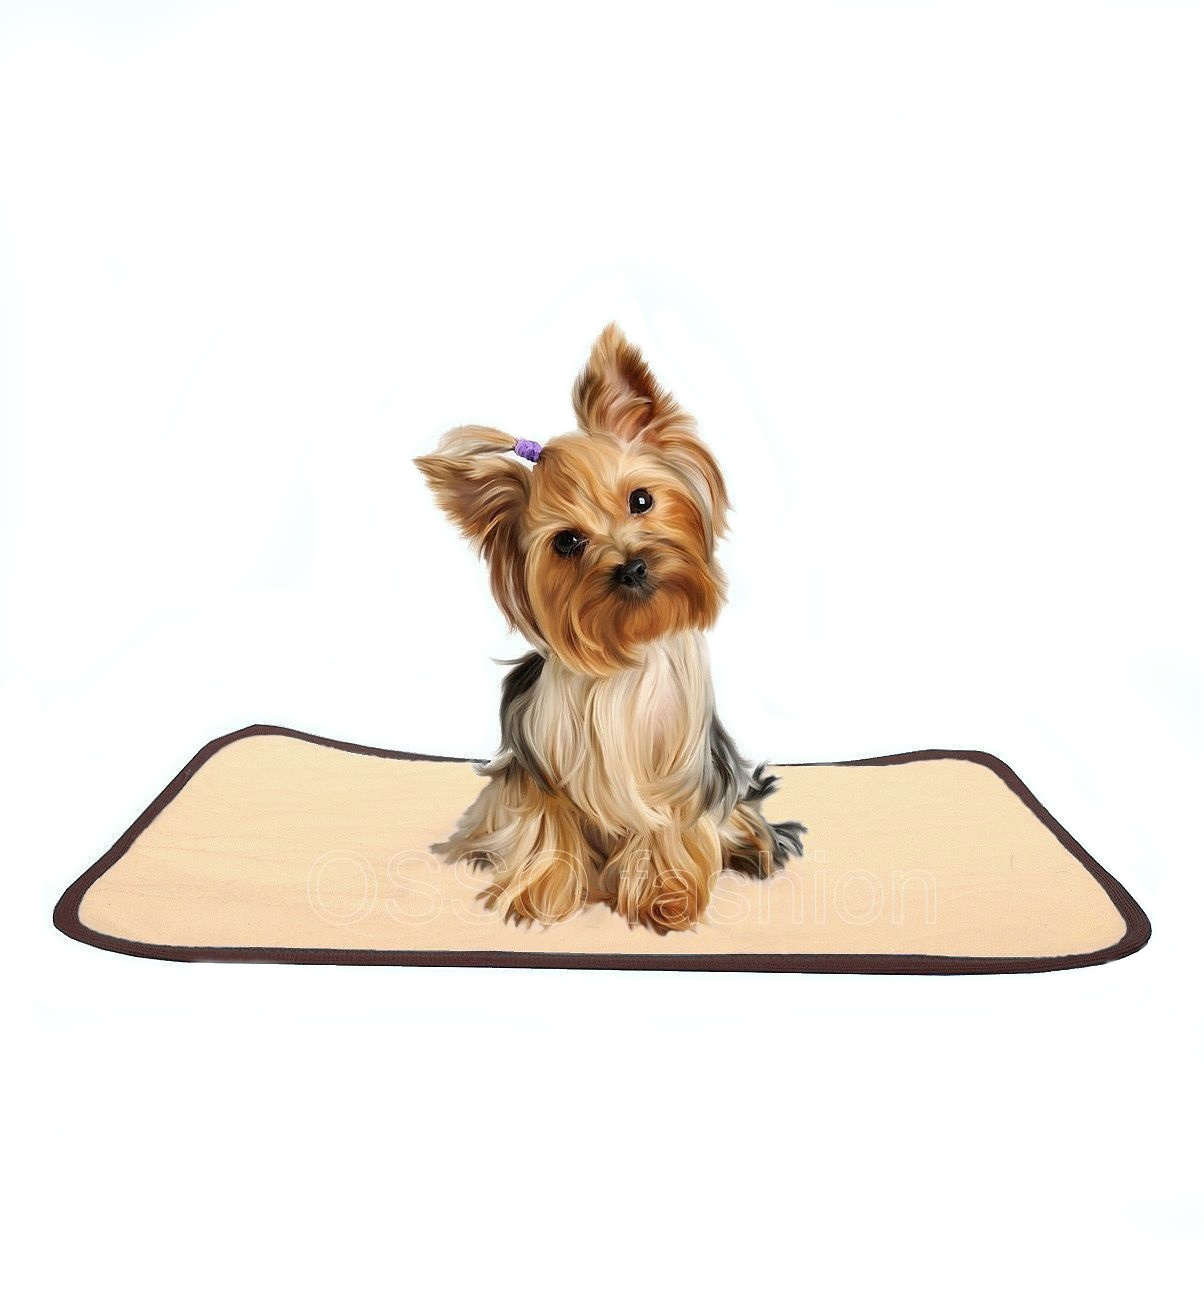 OSSO OSSO пеленка для собак многоразовая впитывающая (коричневая) (50*60 см) osso osso пеленка для собак многоразовая впитывающая коричневая 50 60 см